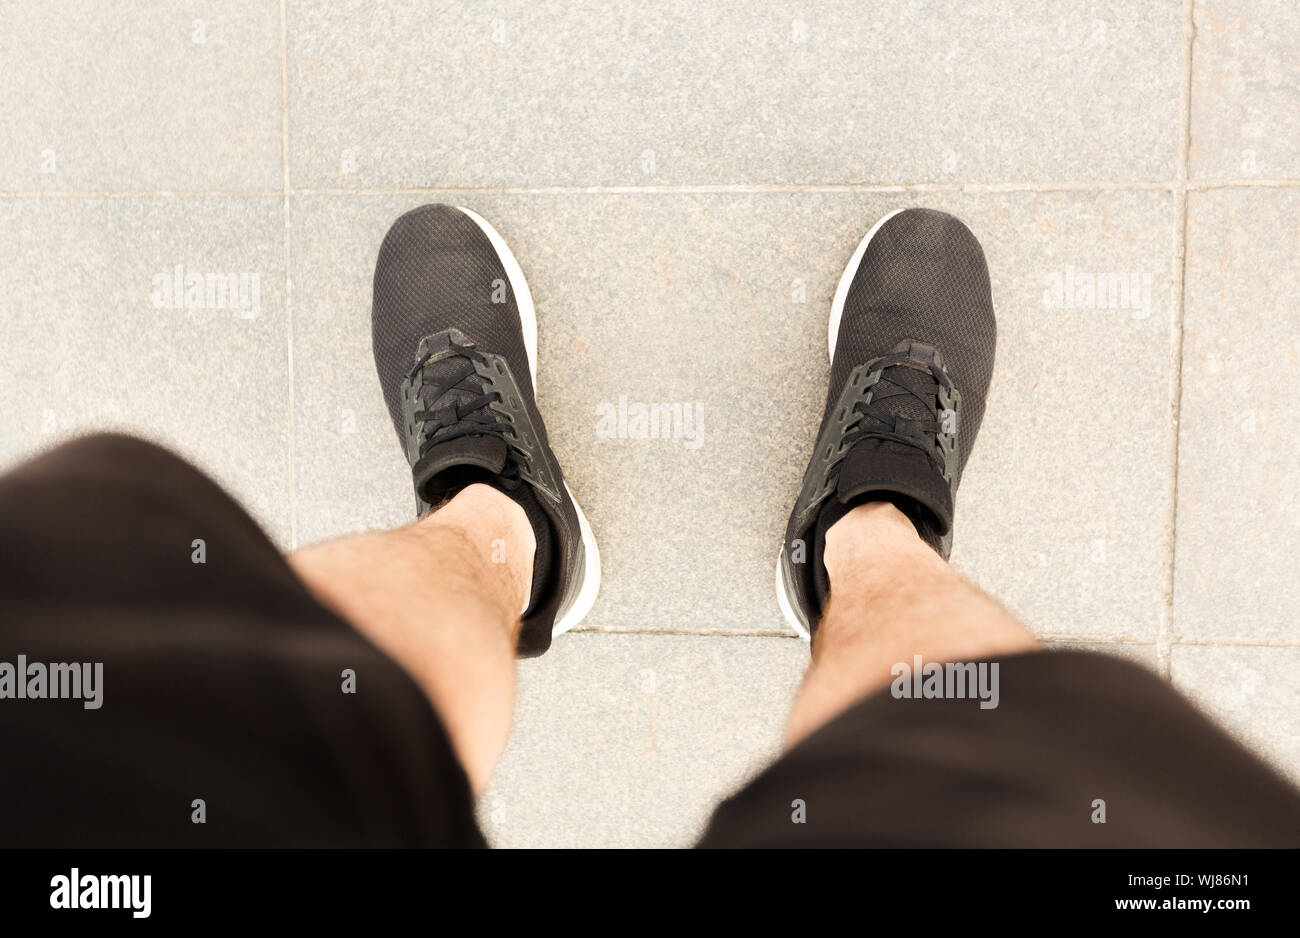 Top View Of Legs In Black Sneakers On Concrete Floor Stock Photo